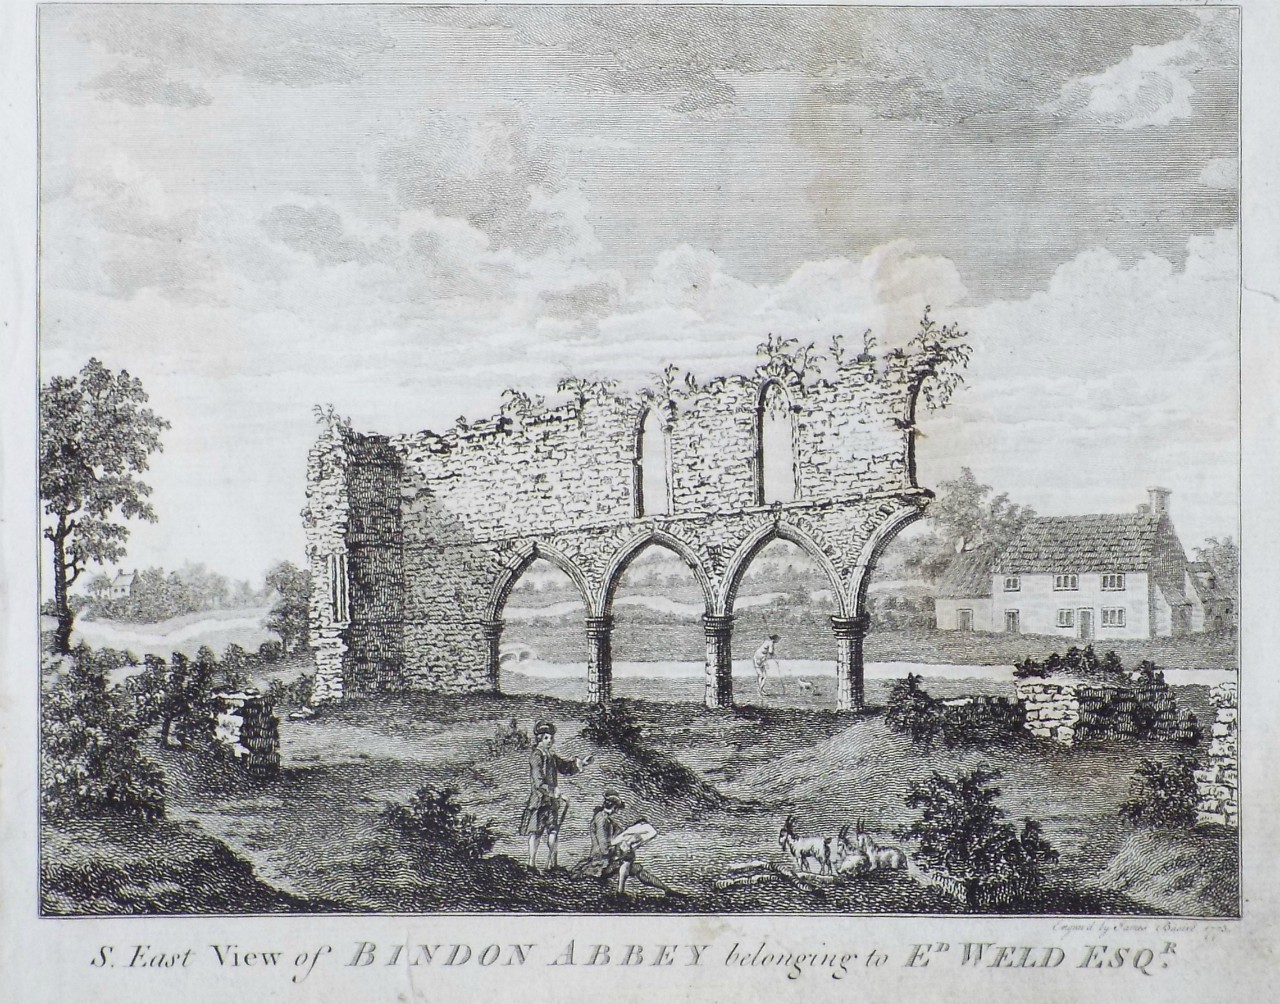 Print - S. East View of Bindon Abbey belonging to Ed Weld Esqr. - Basire